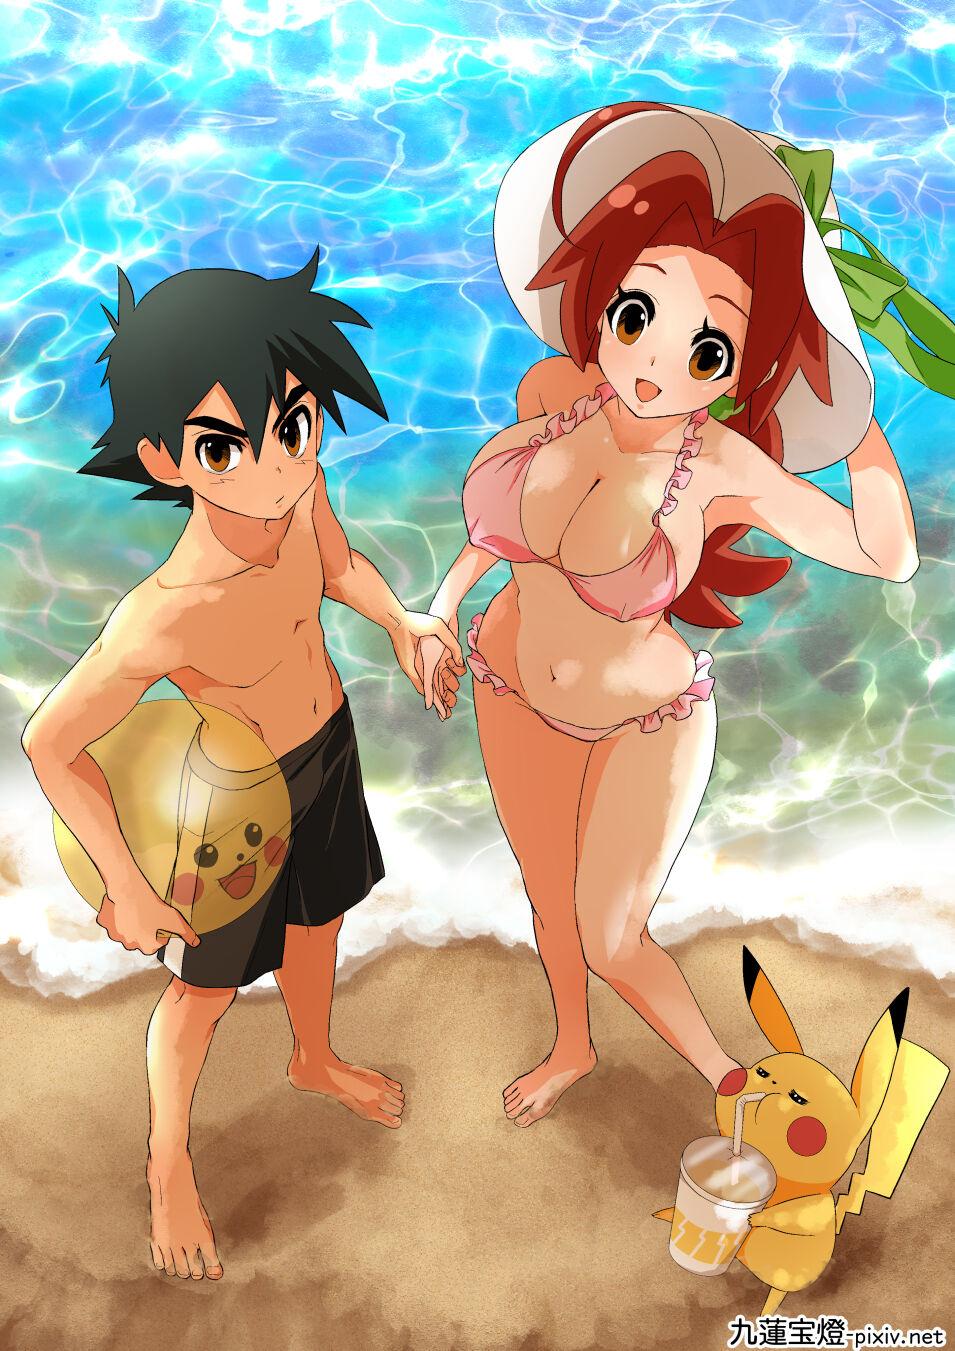 Small Tits SatoHana R18 - Pokemon | pocket monsters Cuzinho - Page 2